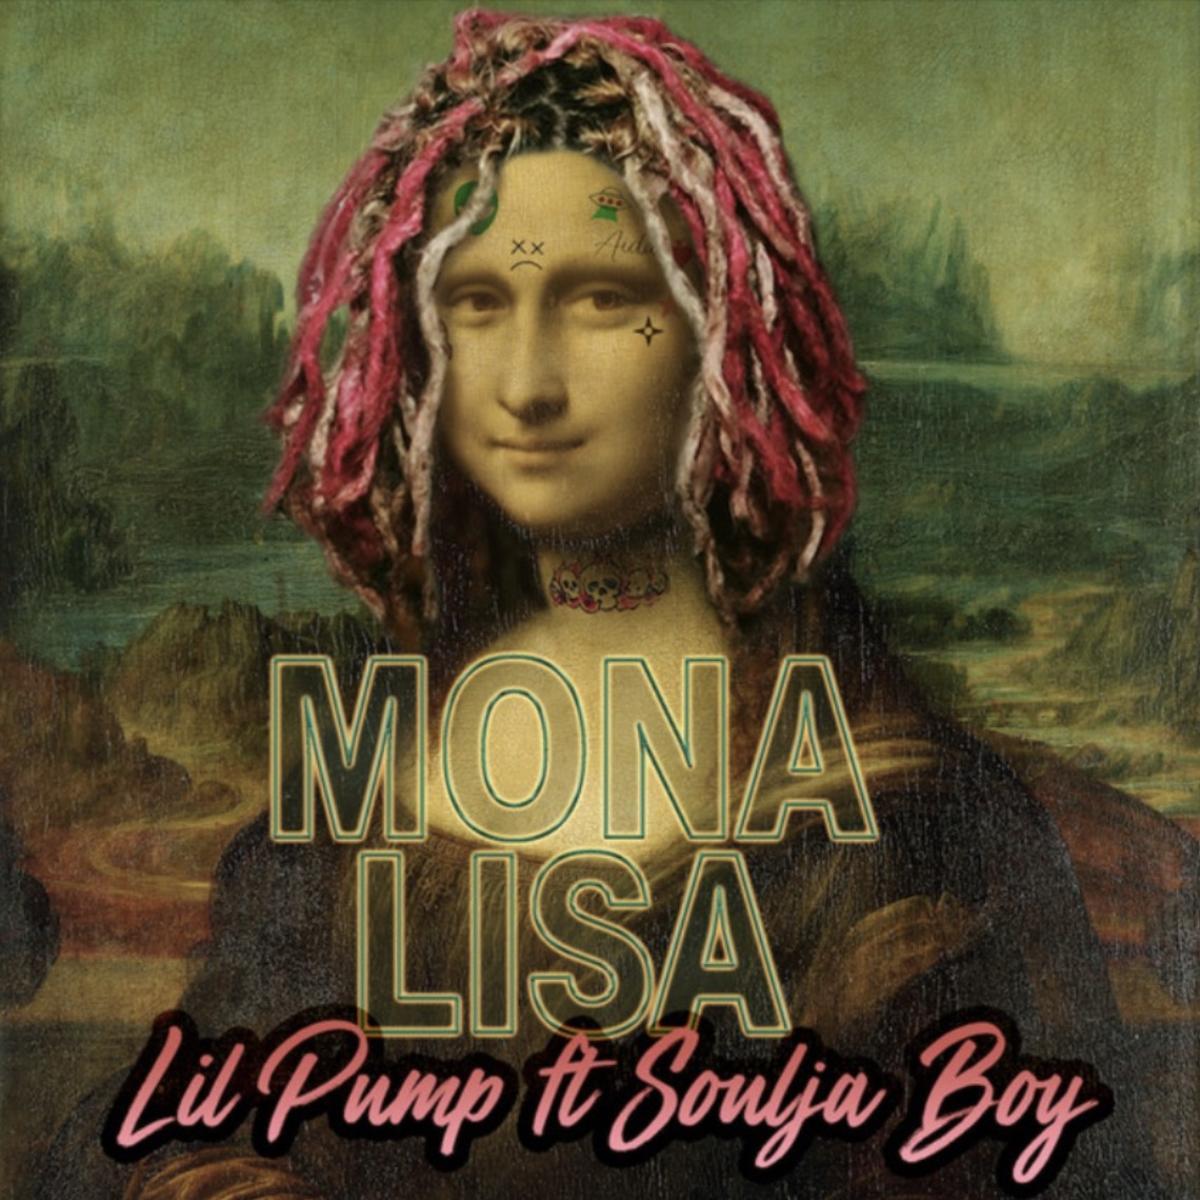 Lil Pump Mona Lisa ft. Soulja Boy